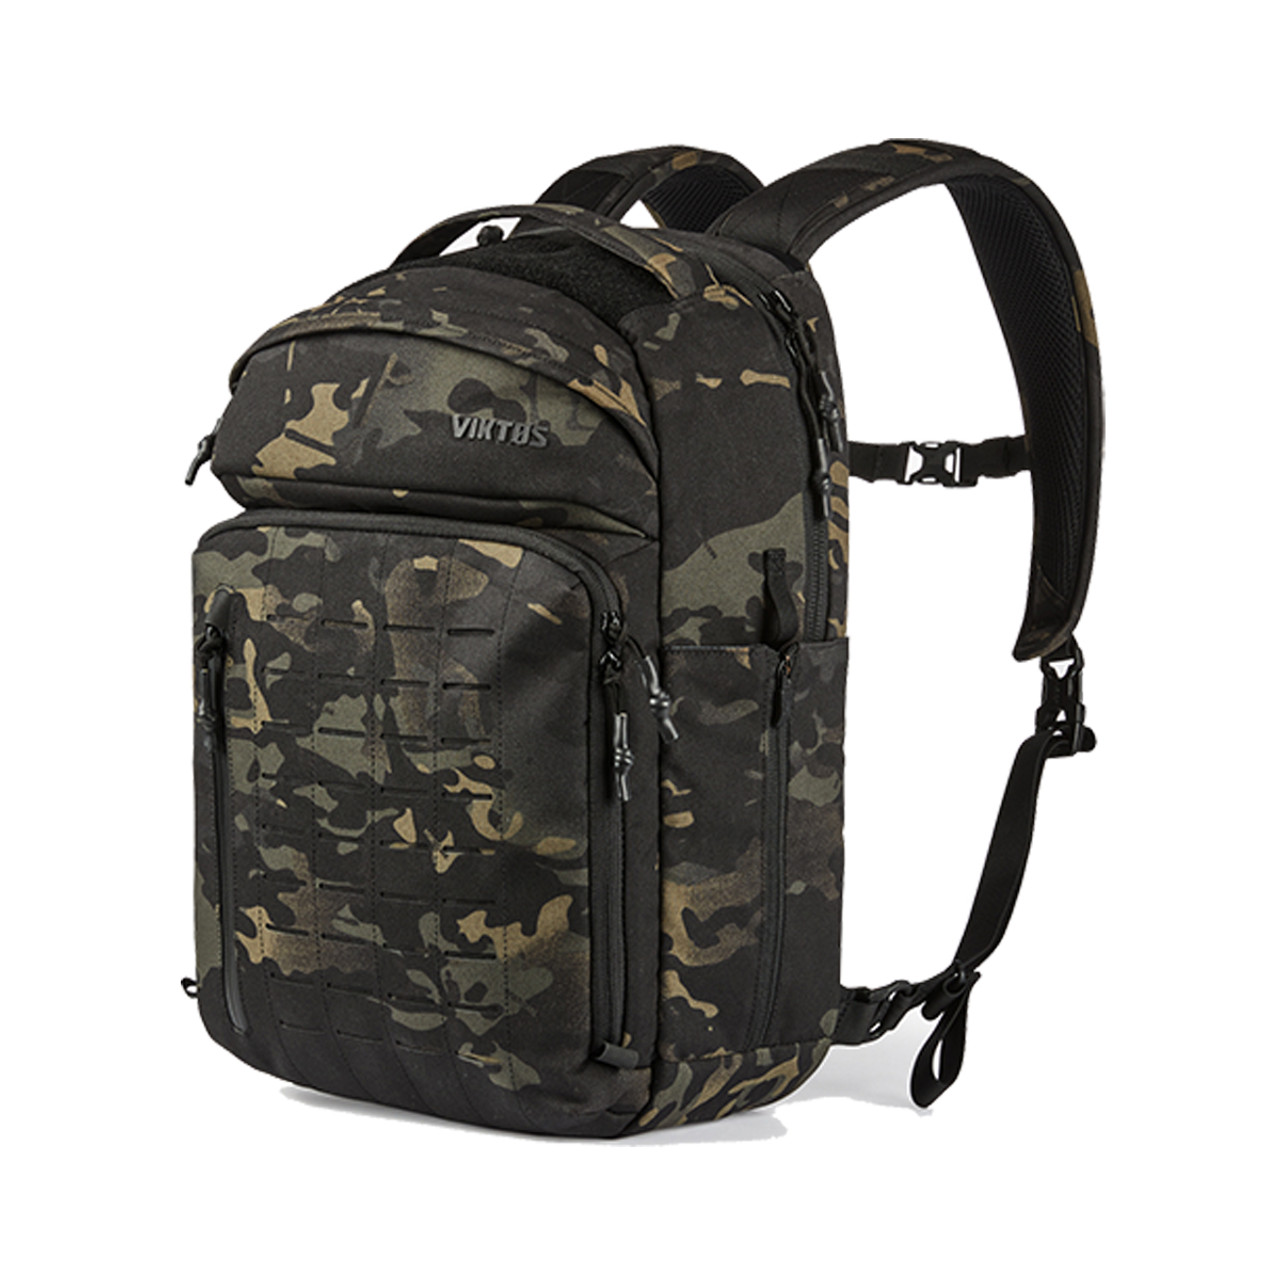 VIKTOS Kadre Tactical Bulletproof Backpack Package - The Ultimate